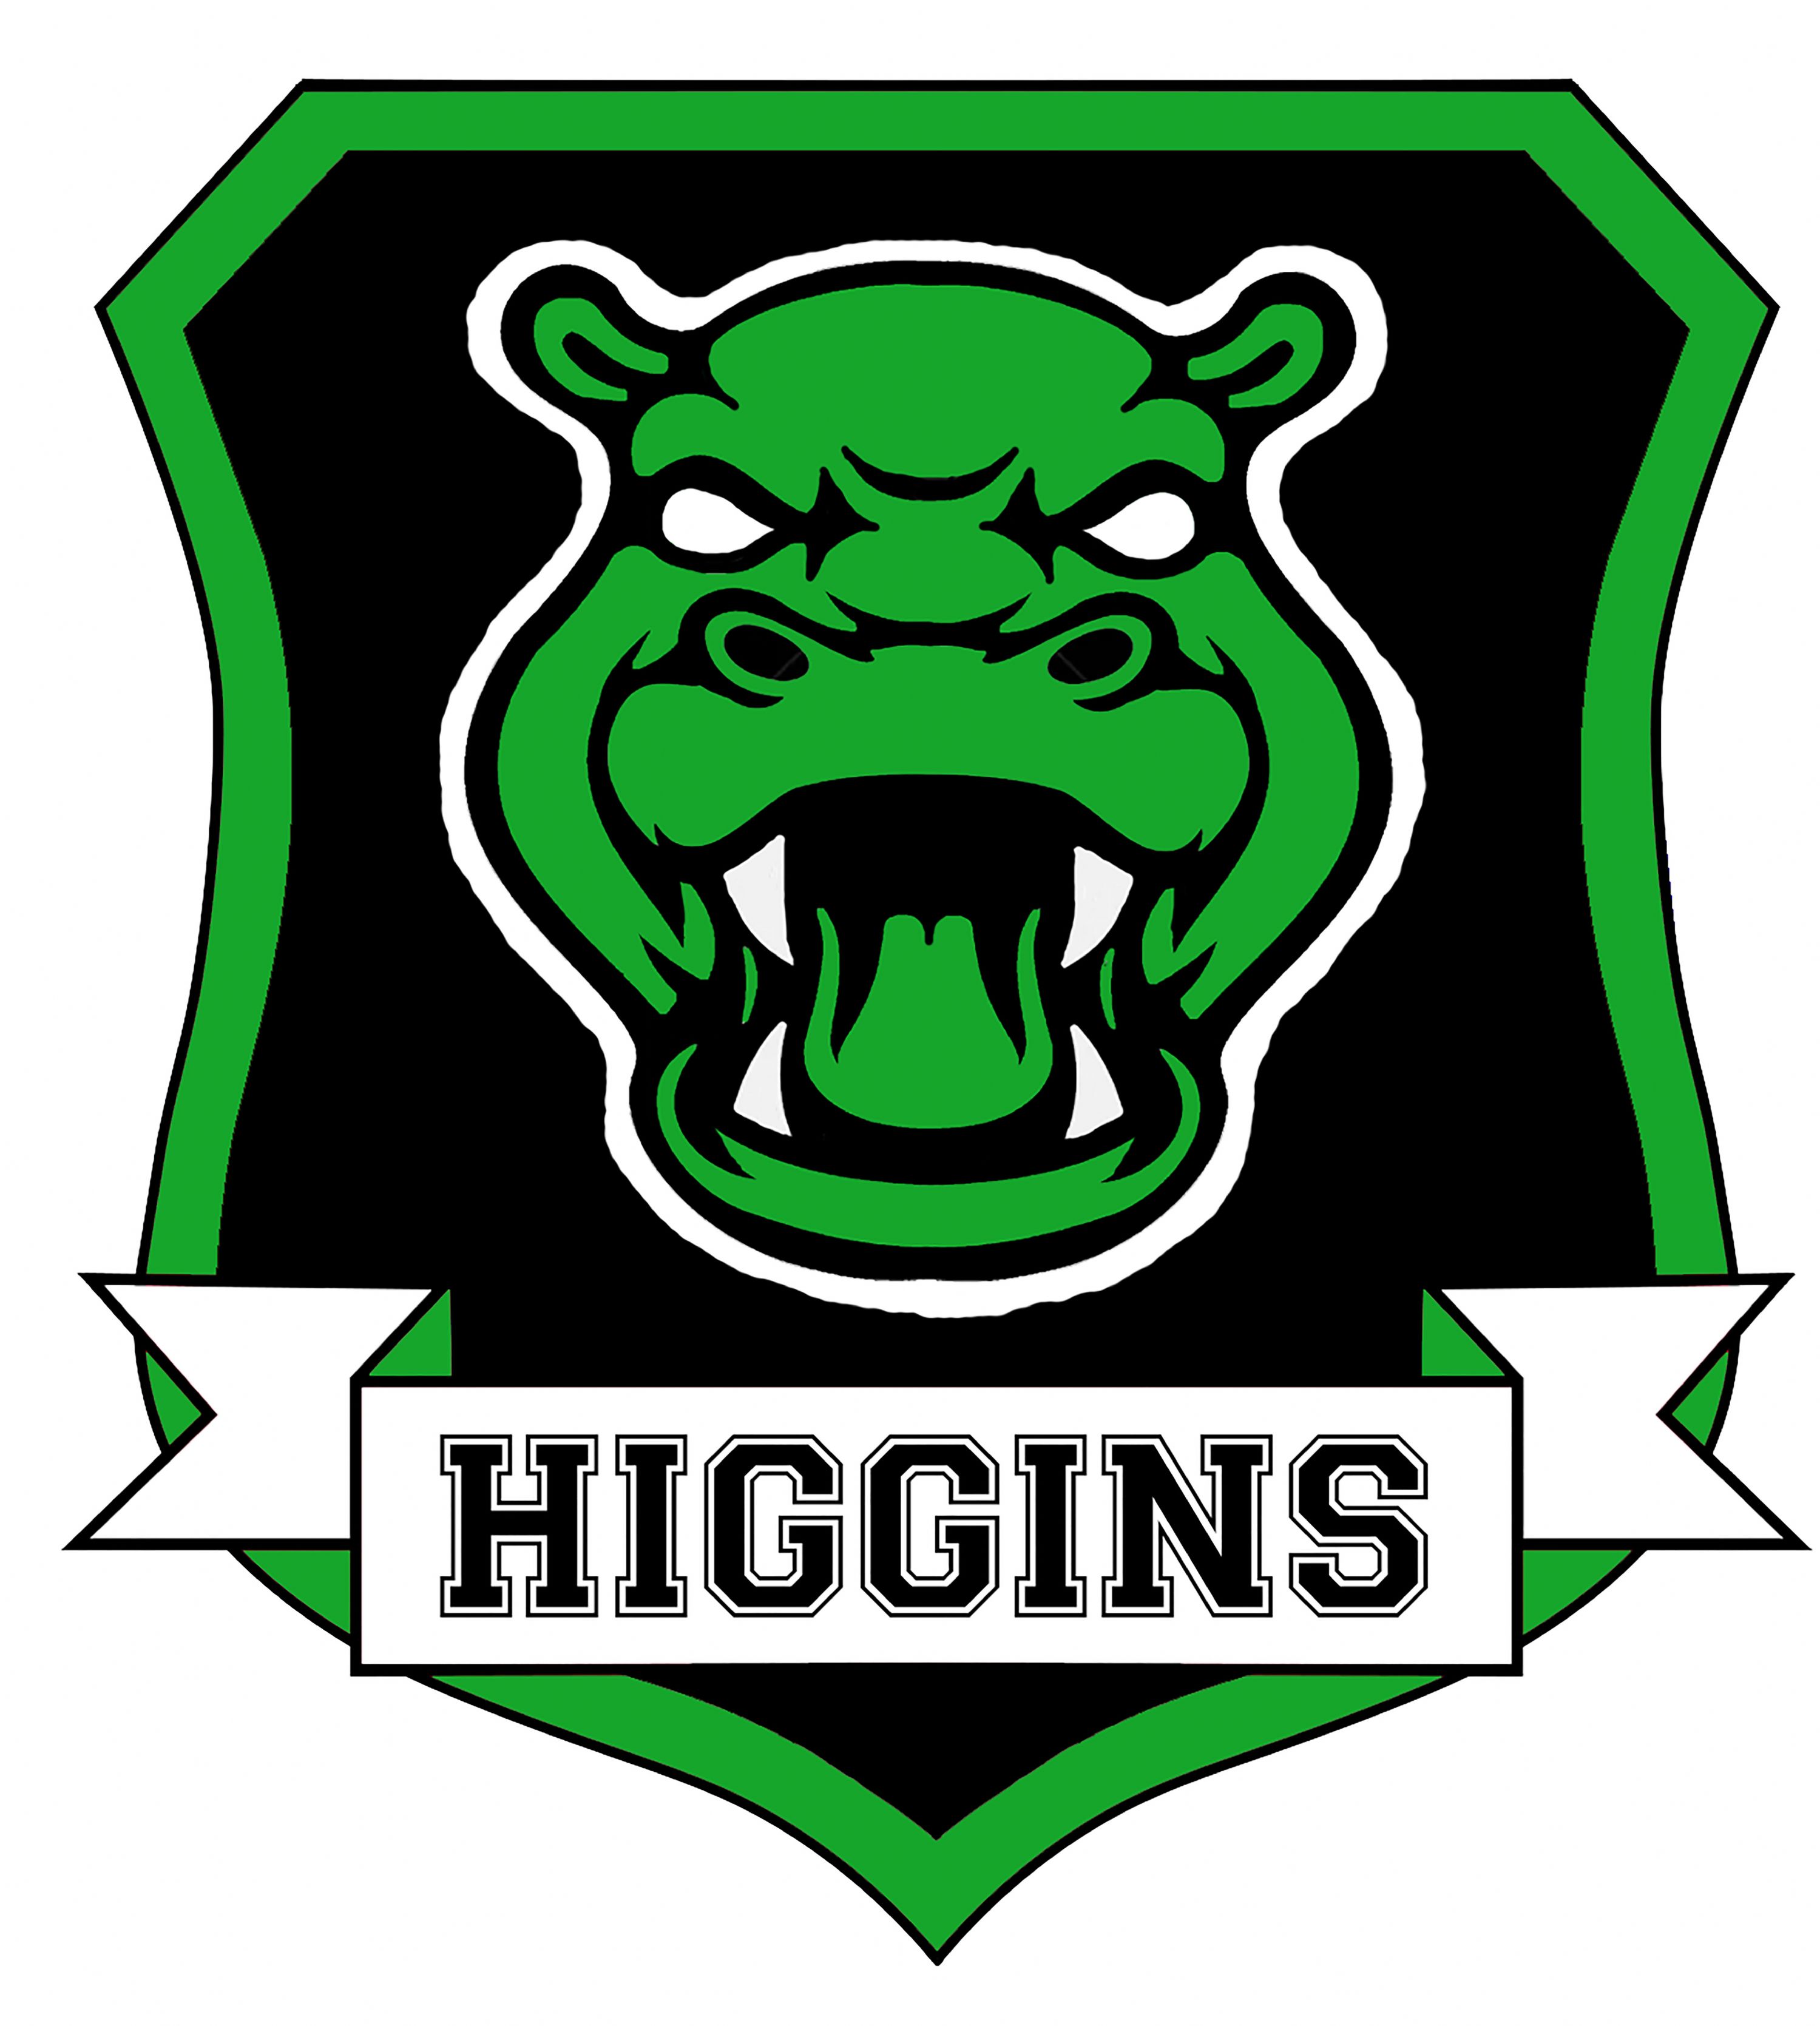 Higgins House logo